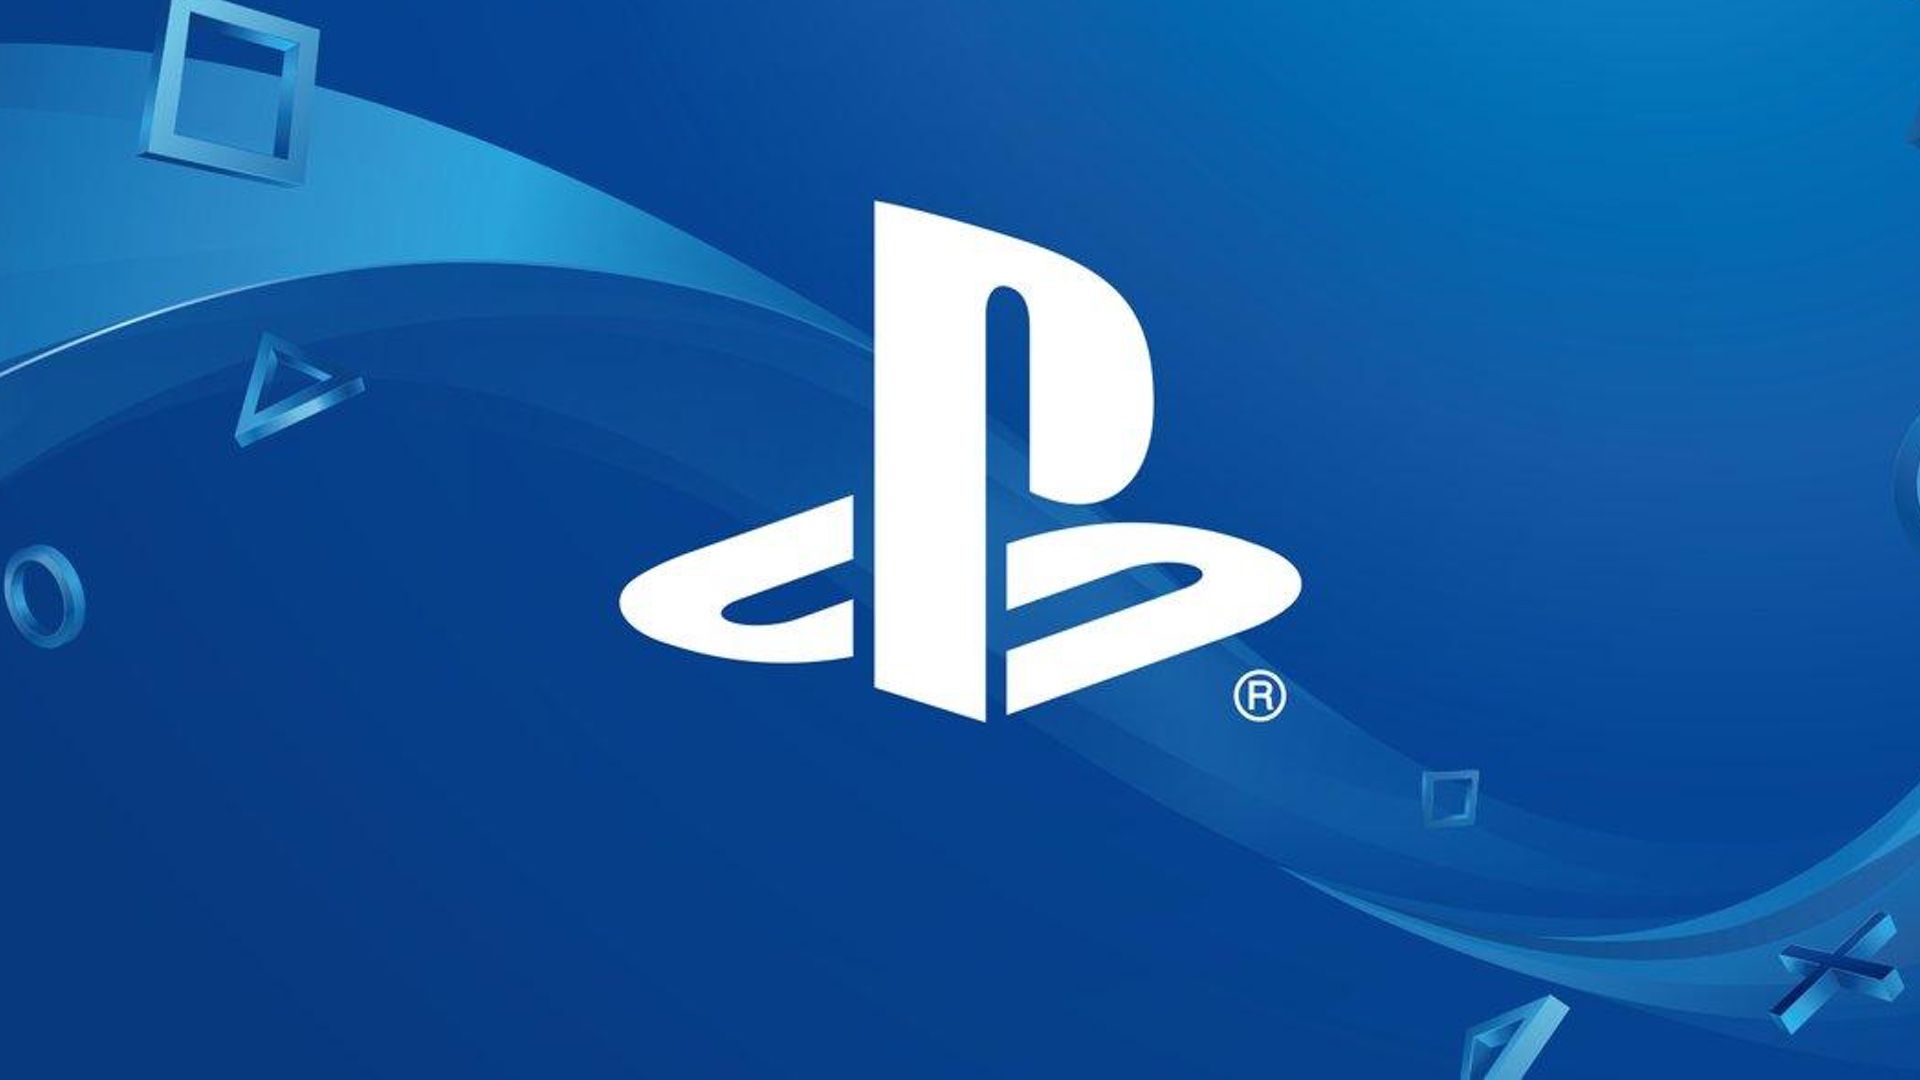 PlayStation NextGen PS5 E3 2020 Samsung NVMe SSD Sony Xbox Series X PAX East 2020 Coronavirus